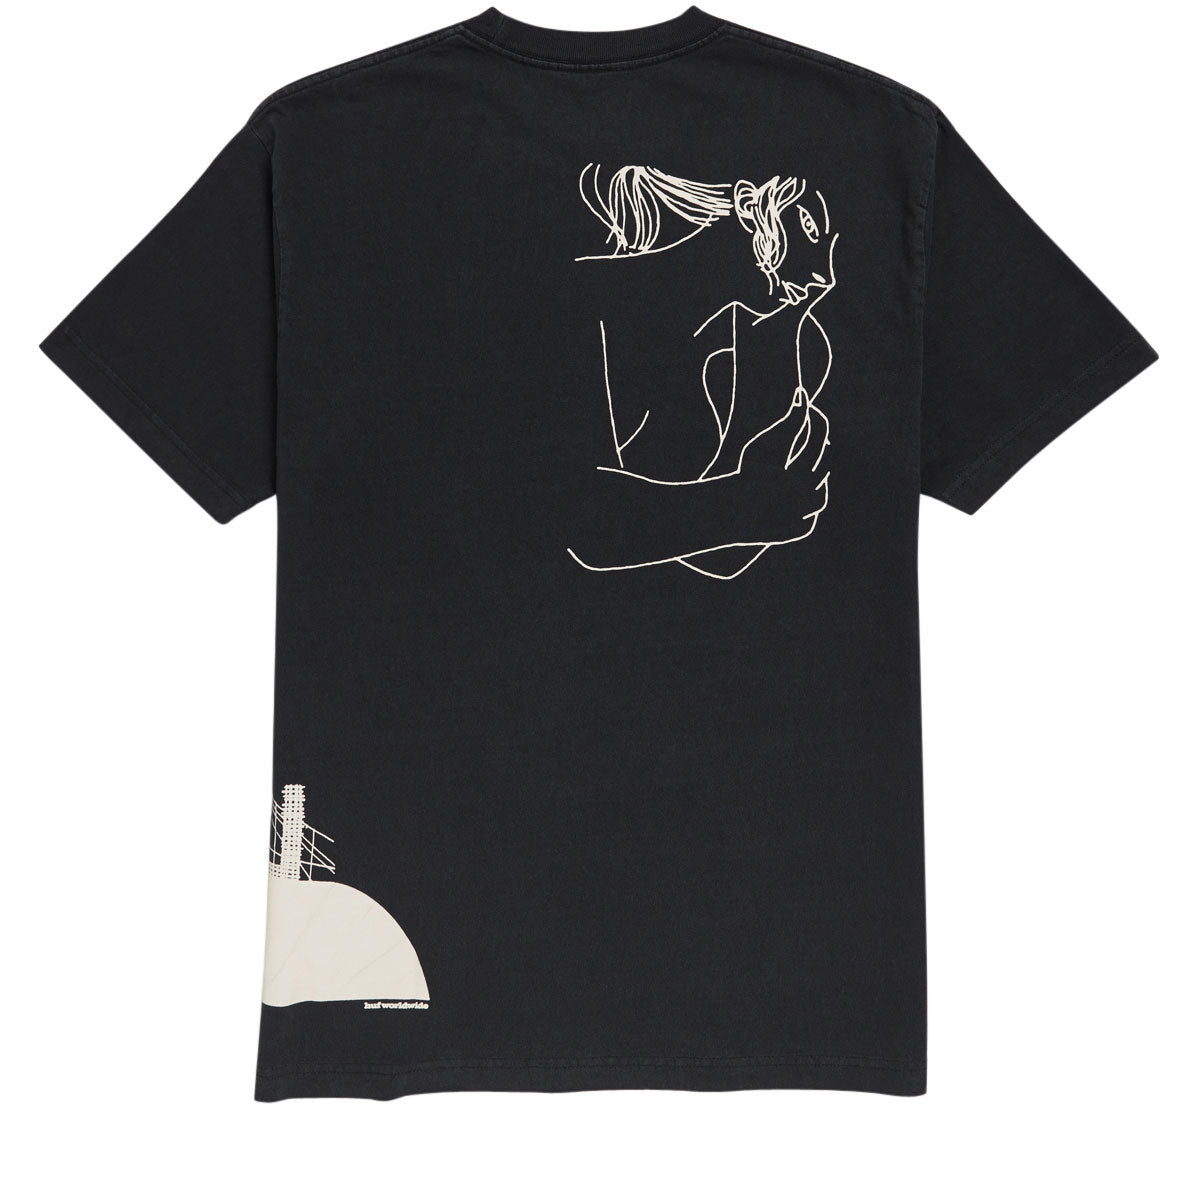 HUF Loosies Washed T-Shirt - Washed Black image 2